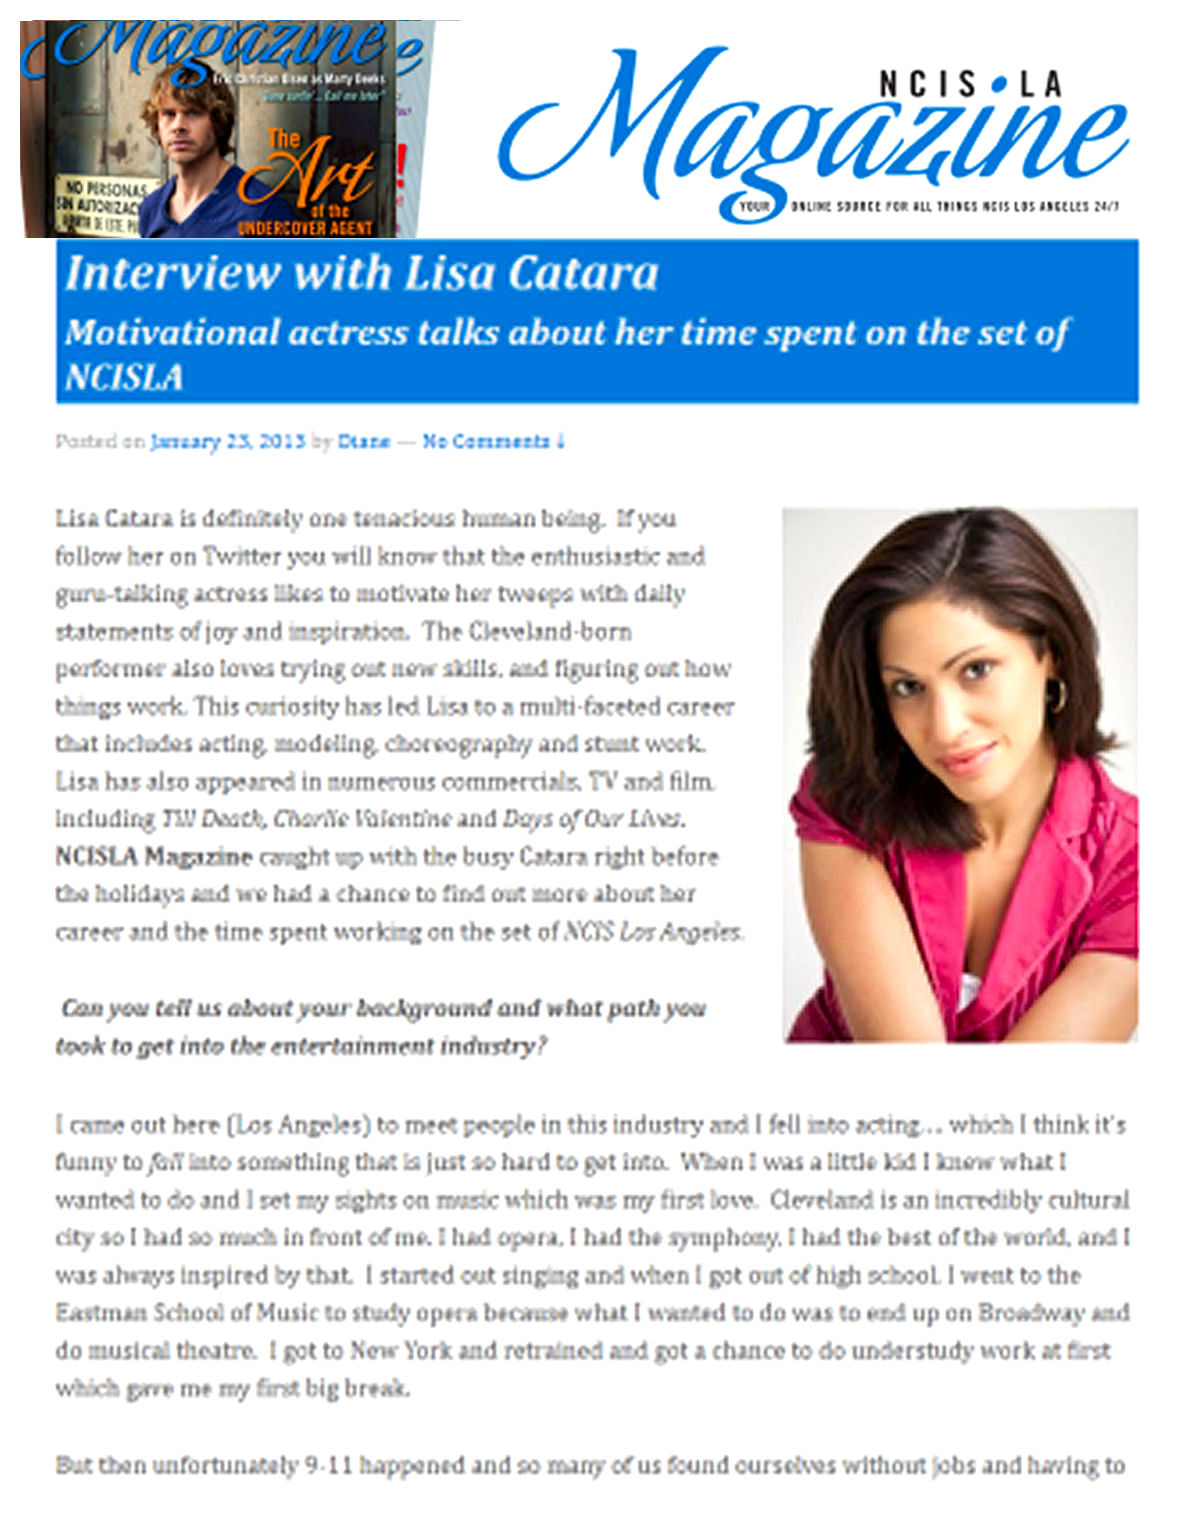 Actress Lisa Catara interview in NCIS LA Magazine